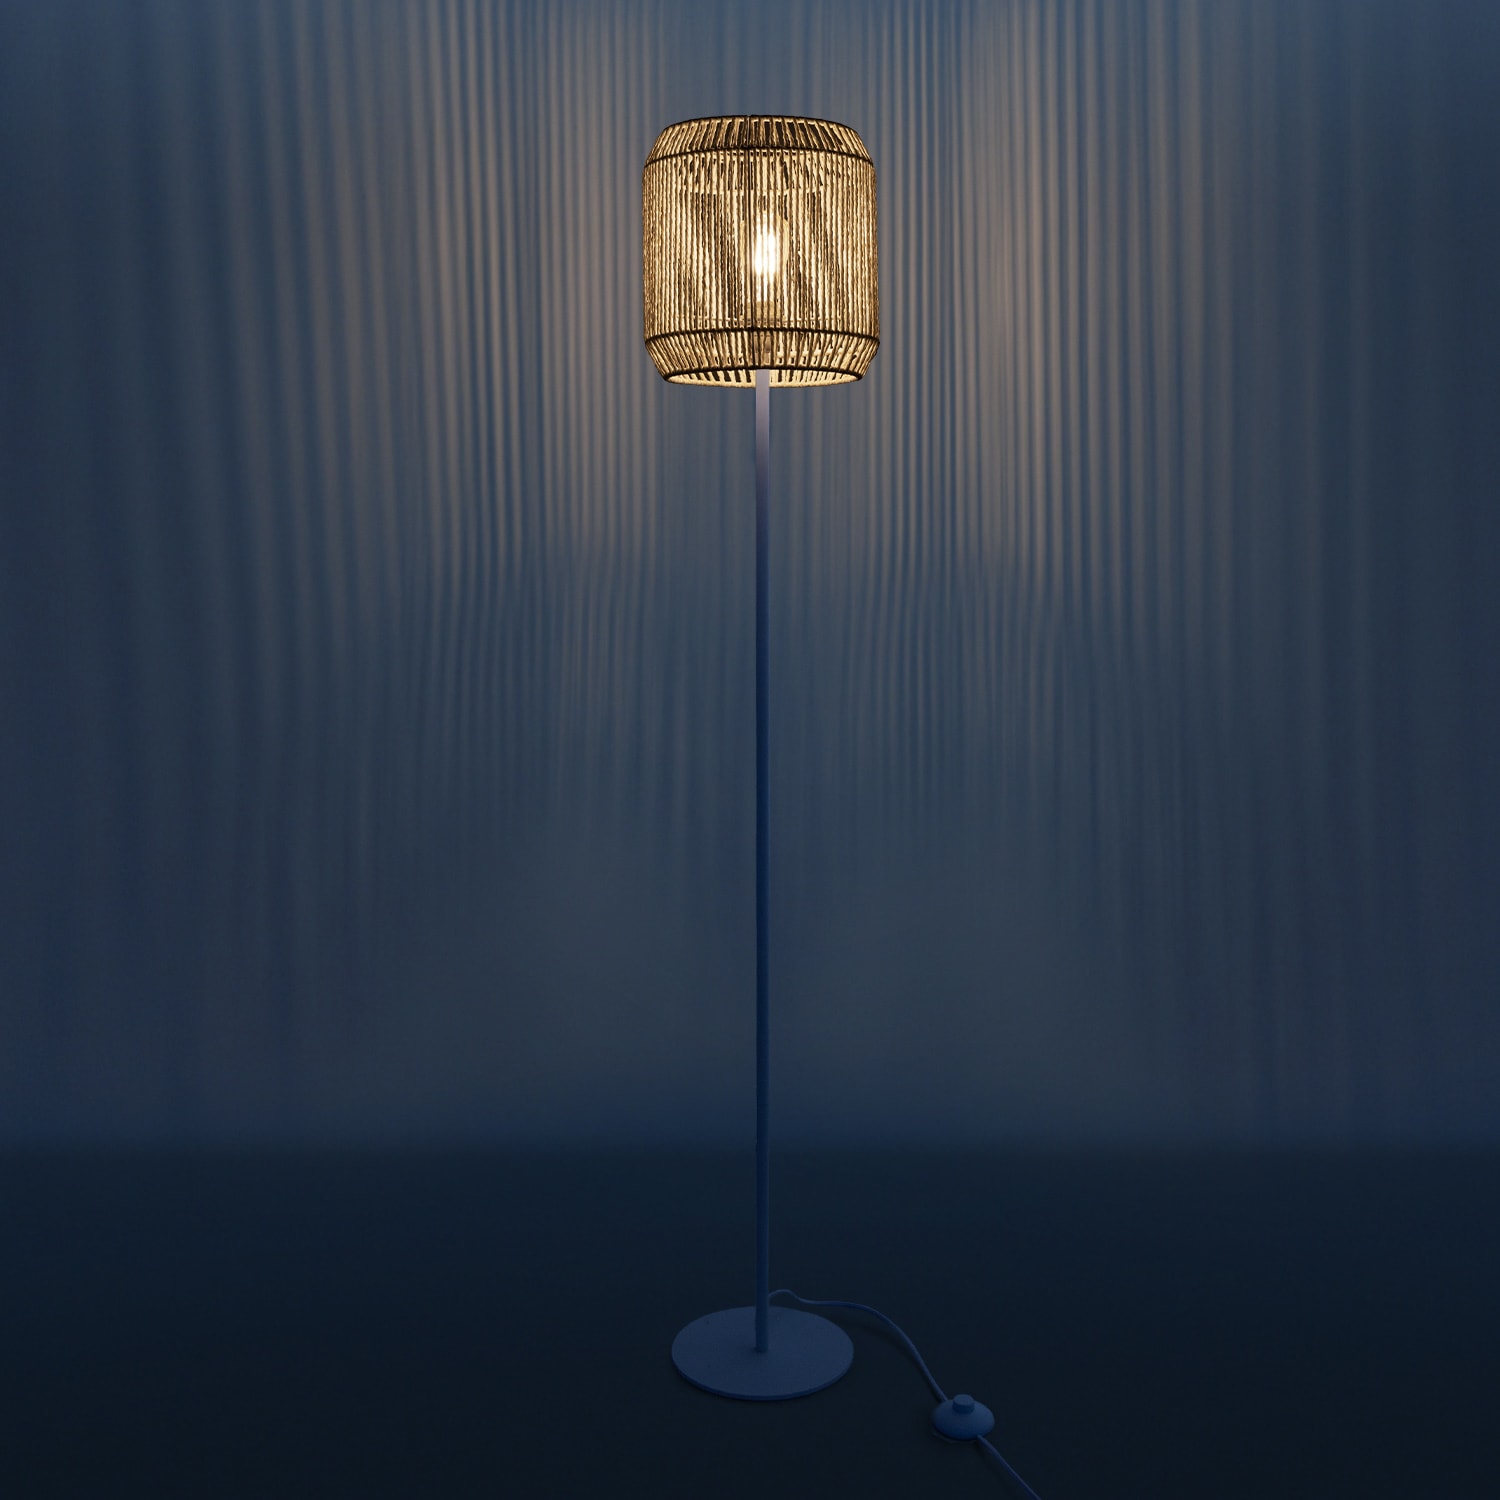 Deckenlampe | Home flammig-flammig, Kinderzimmer BAUR Paco E27 Lampe 1 »Pedro«, Stehlampe Kinderlampe LED Lama-Motiv,